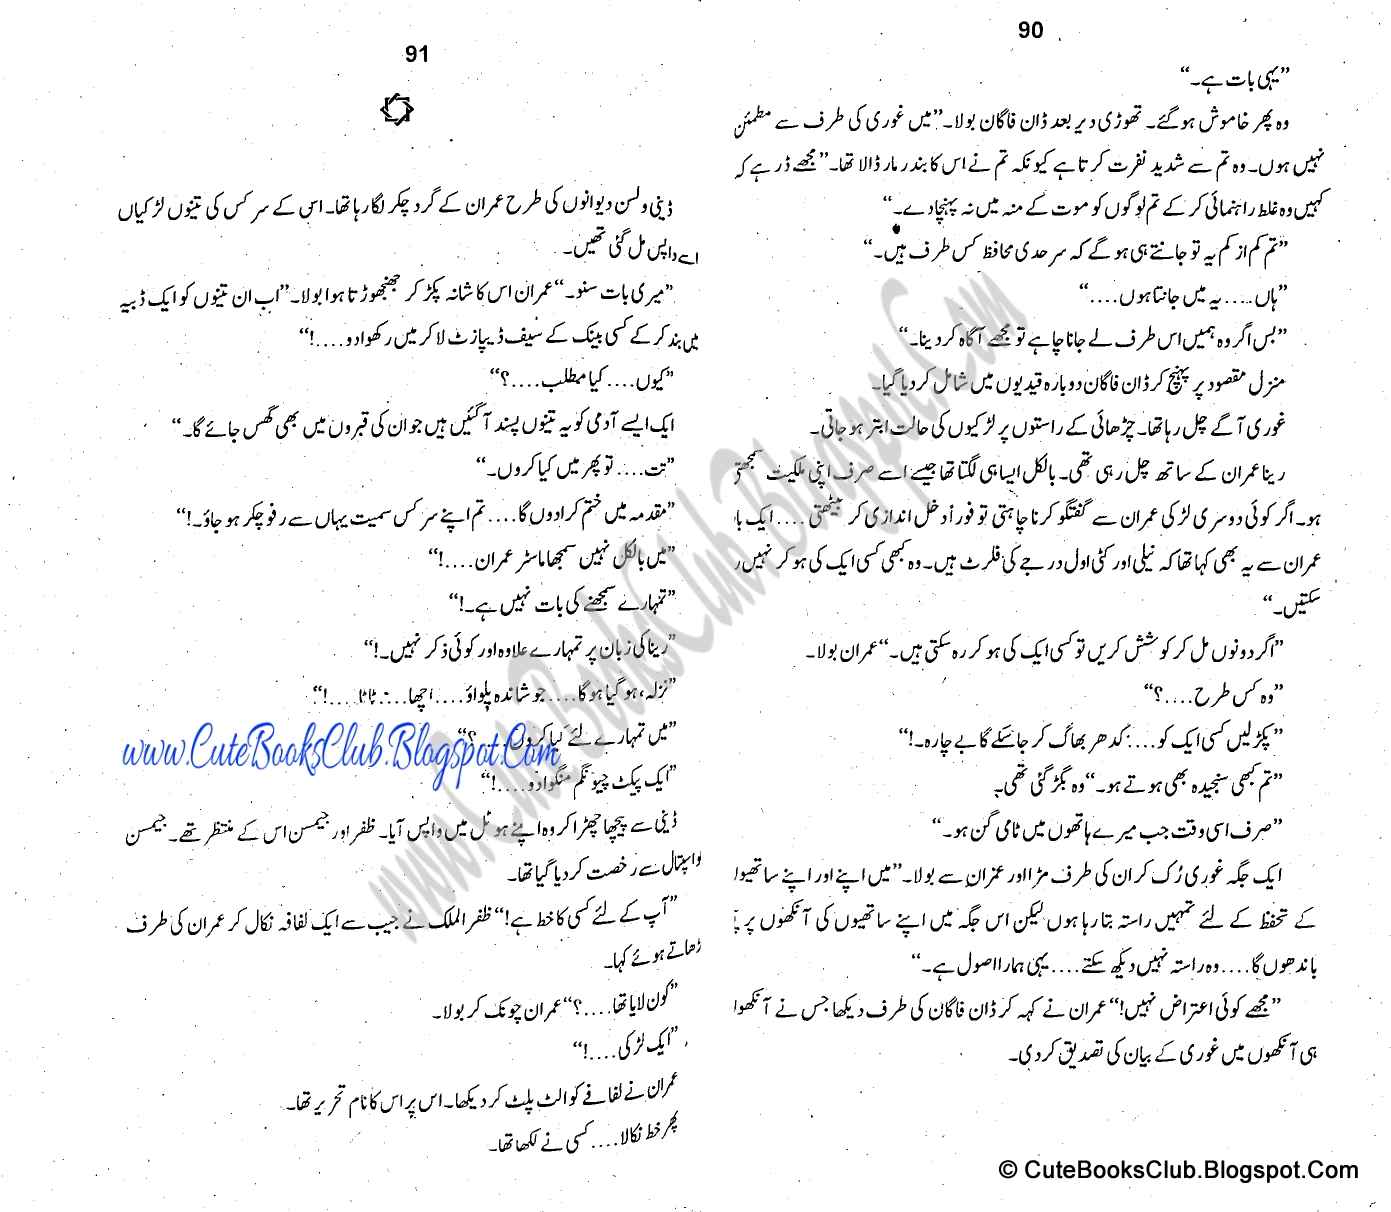 064-Uqabon Key Hamlay, Imran Series By Ibne Safi (Urdu Novel)